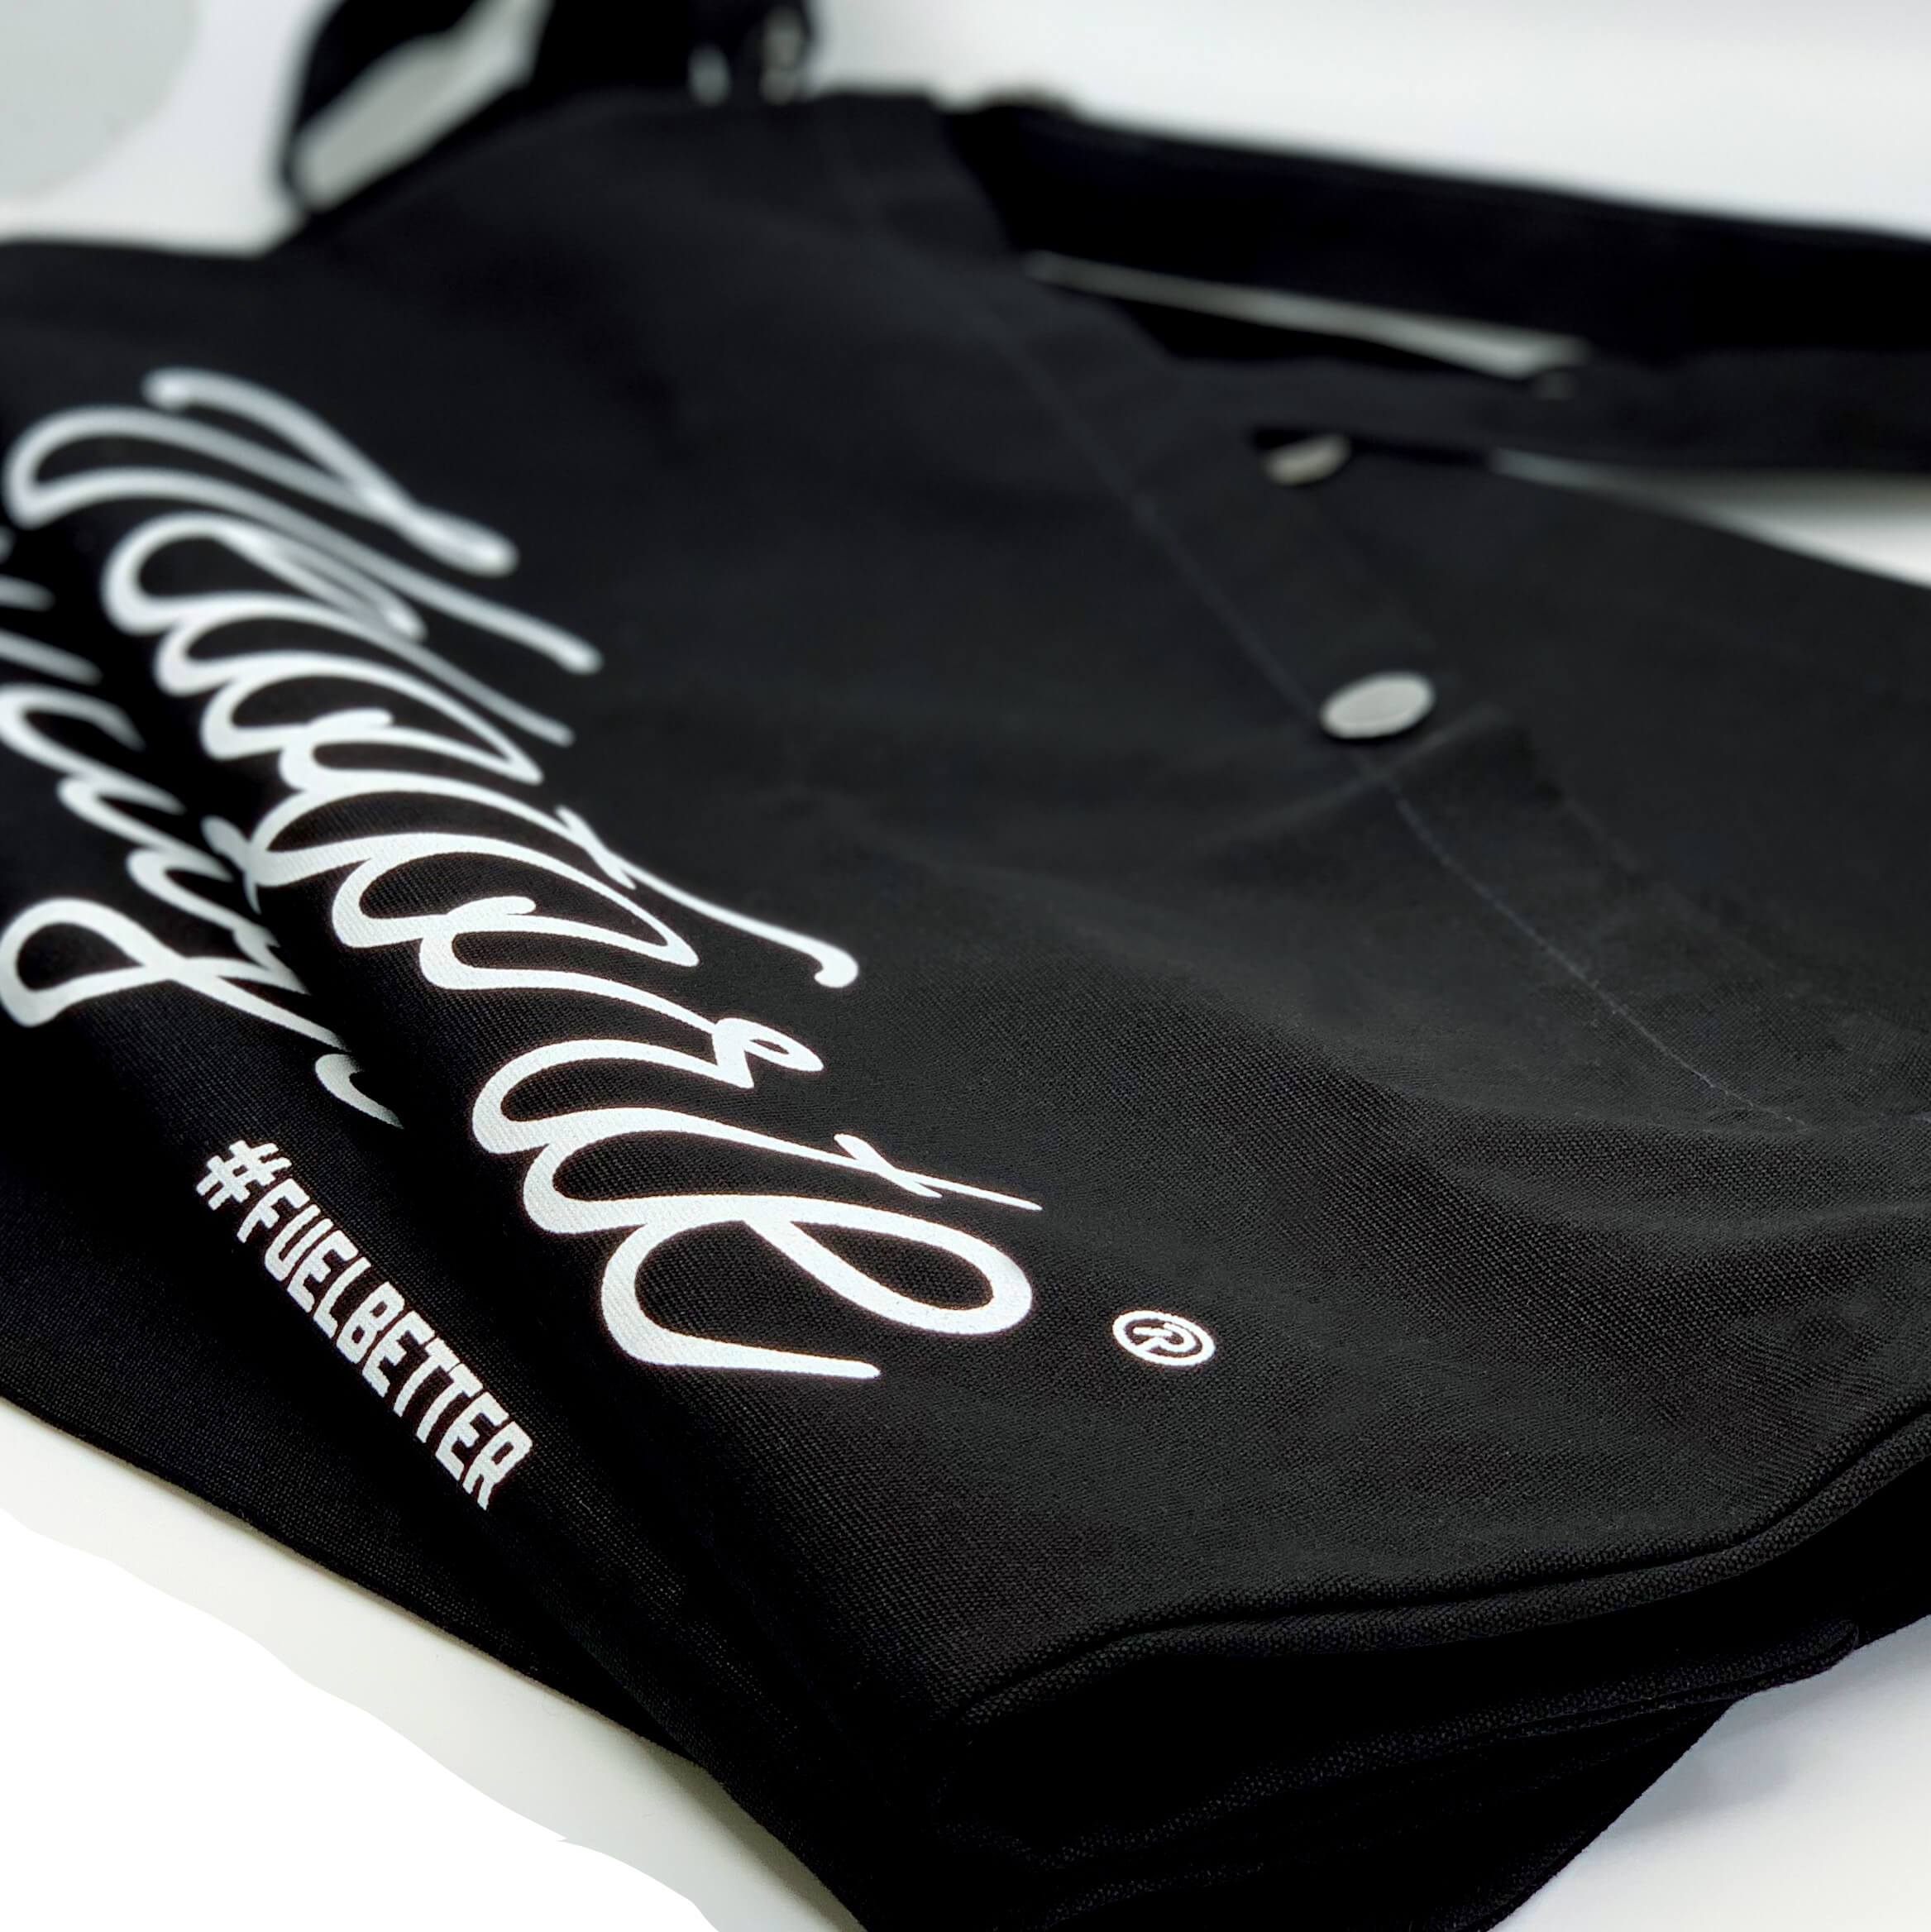 Veloforte Accessories Musette Bag - Black Canvas Musette Bag